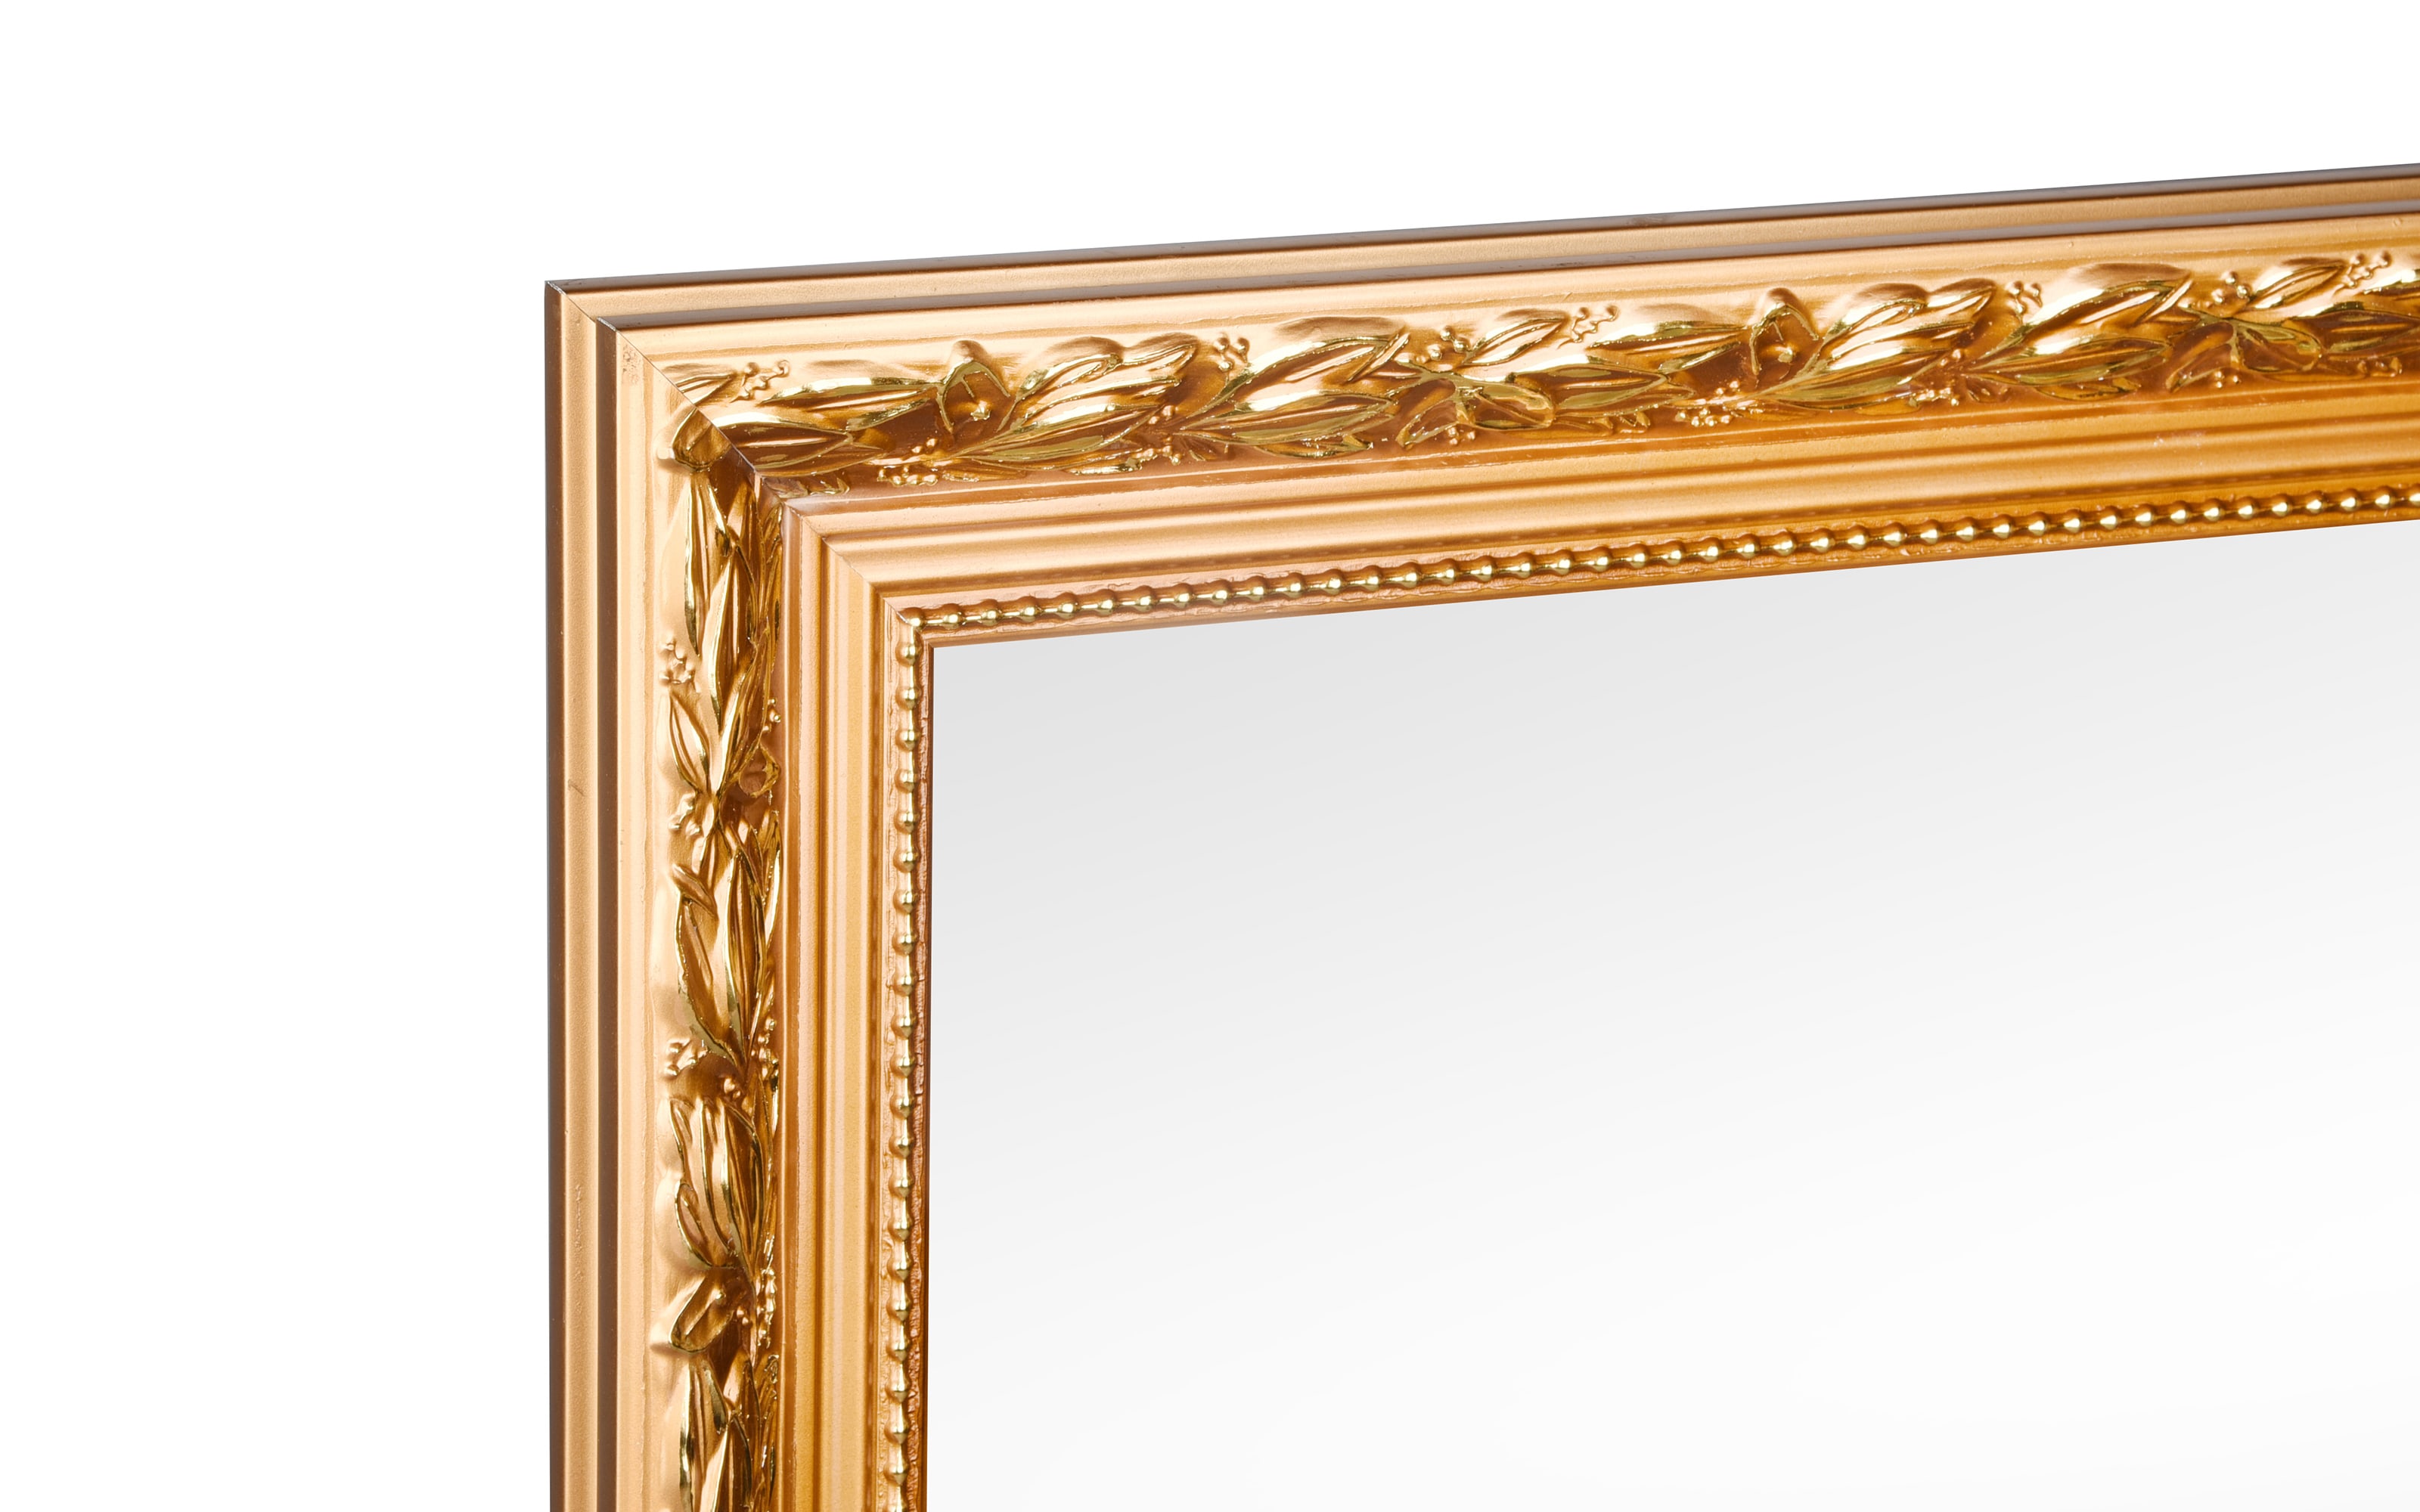 Rahmenspiegel Sonja in goldfarbig, 100 x 200 cm